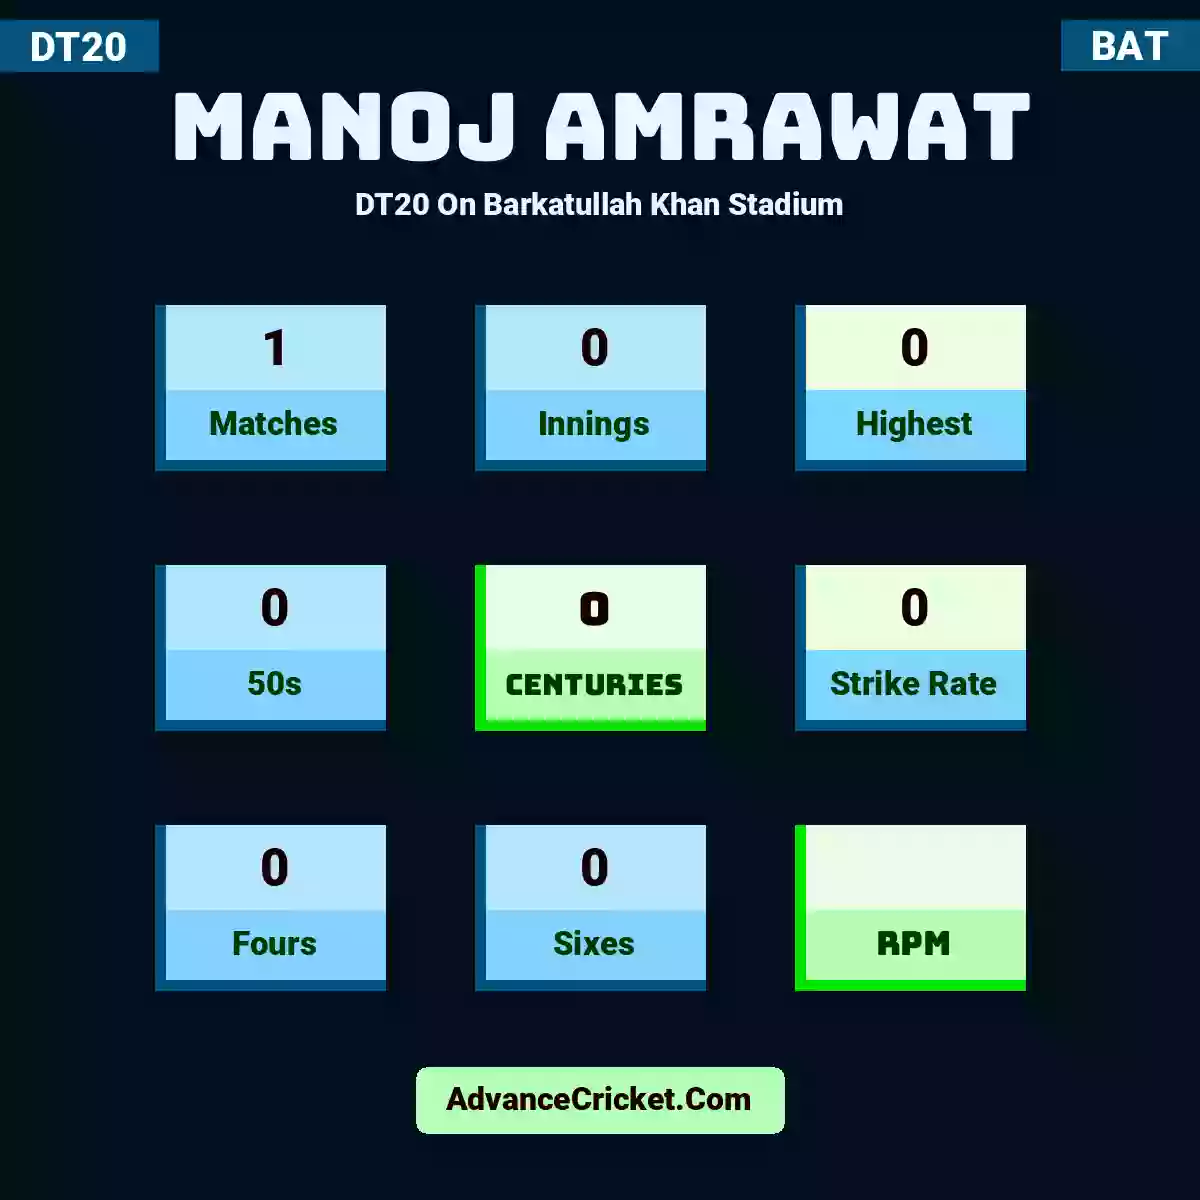 Manoj Amrawat DT20  On Barkatullah Khan Stadium, Manoj Amrawat played 1 matches, scored 0 runs as highest, 0 half-centuries, and 0 centuries, with a strike rate of 0. M.Amrawat hit 0 fours and 0 sixes.